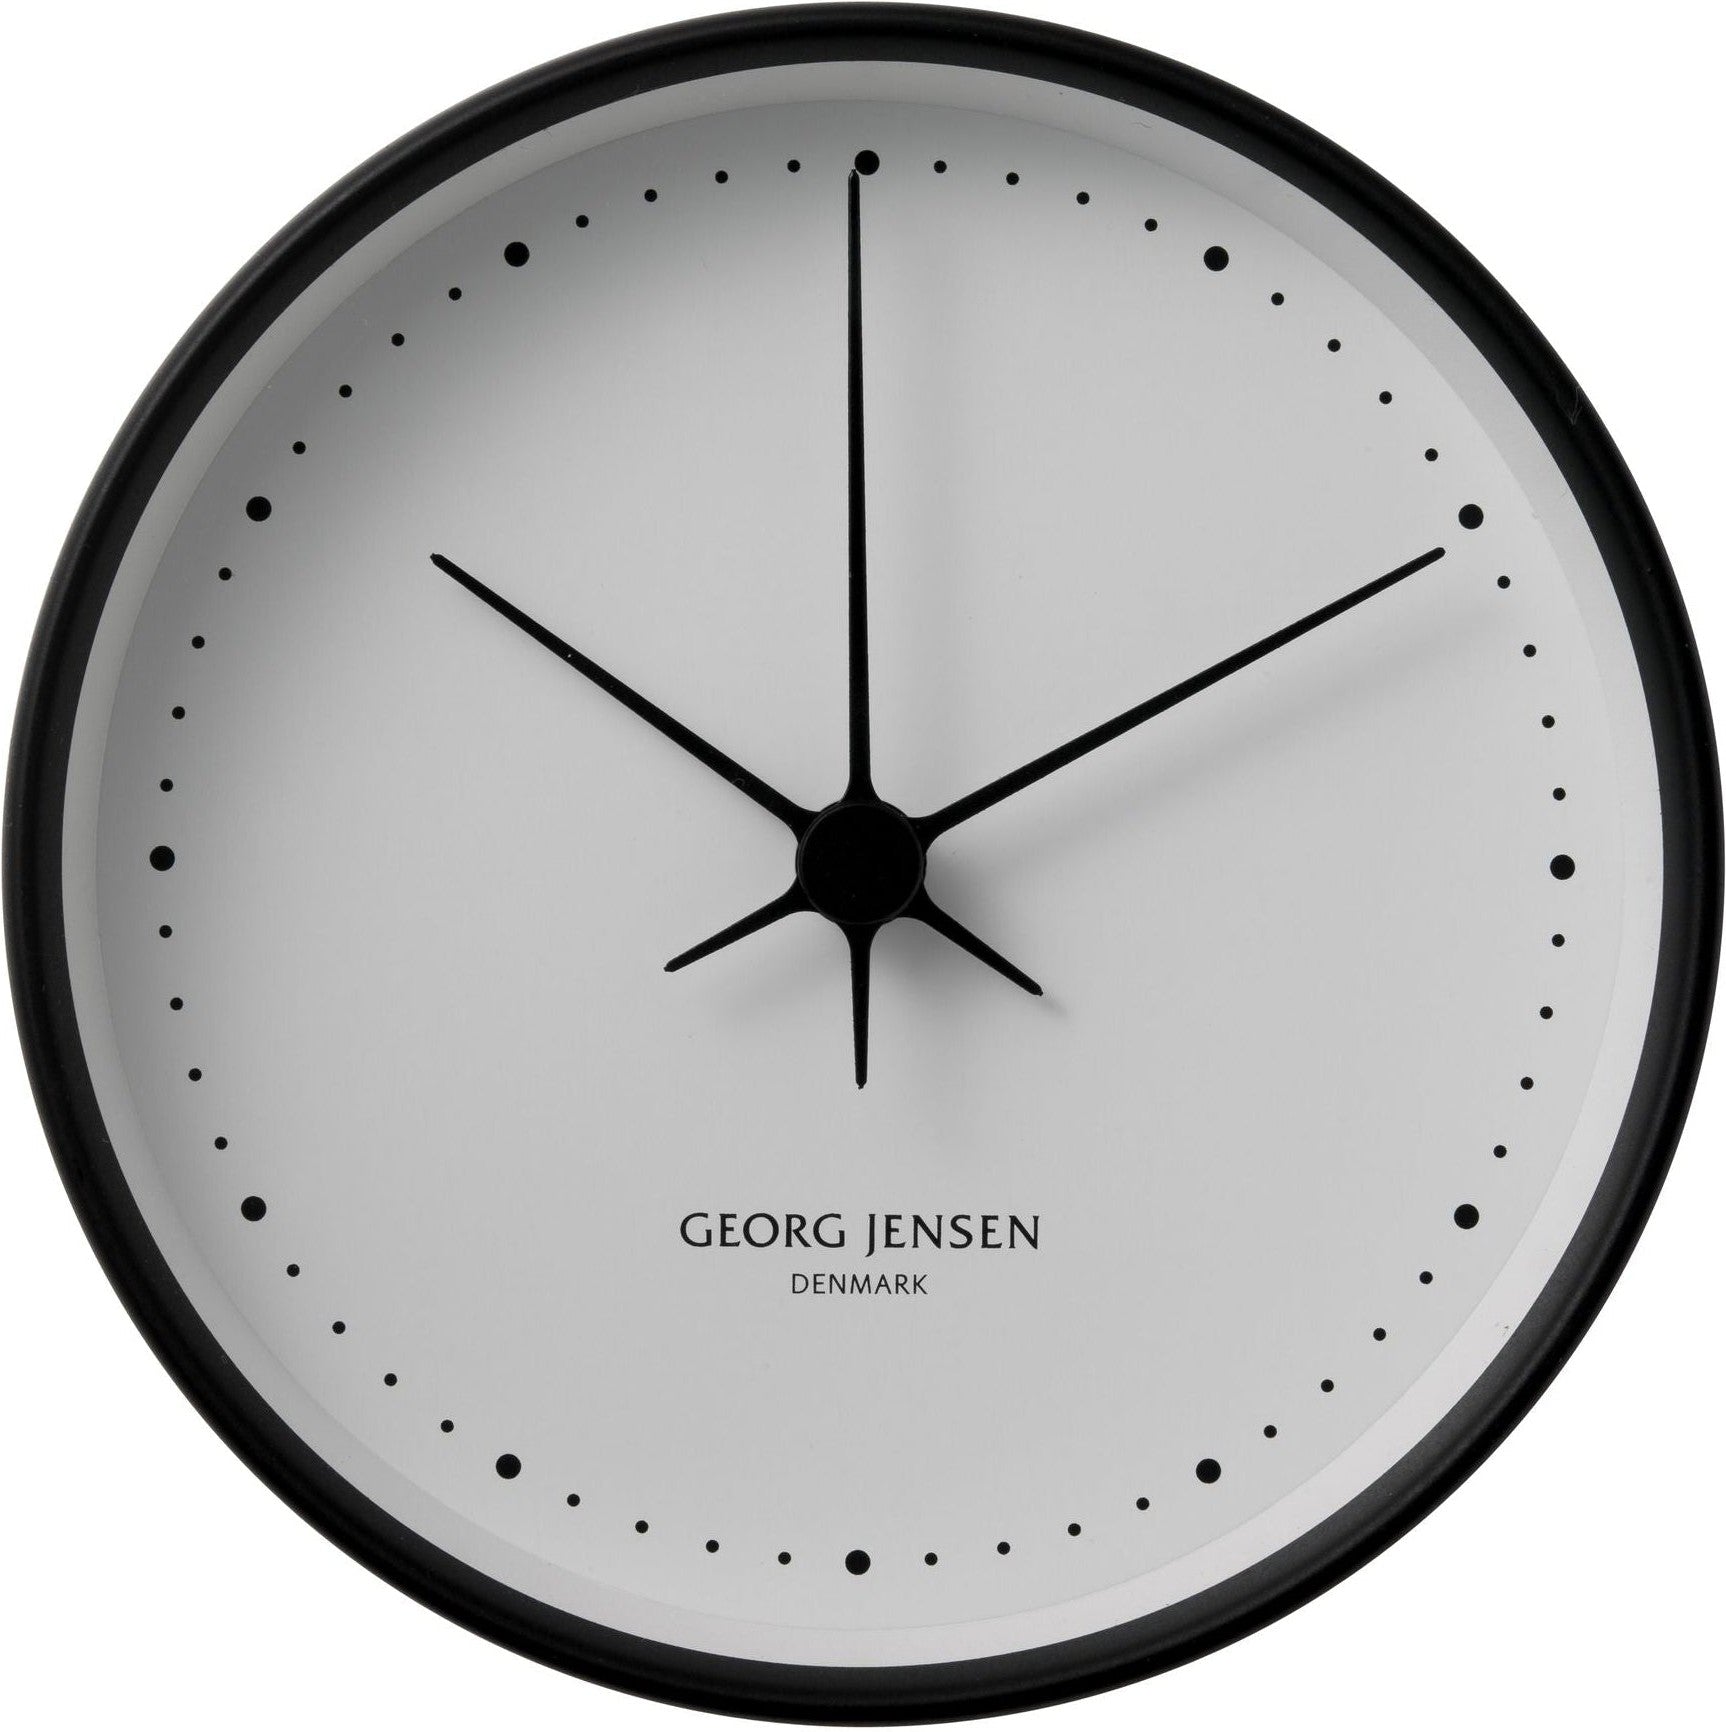 Georg Jensen Hk Wall Clock Black/White, 22 Cm